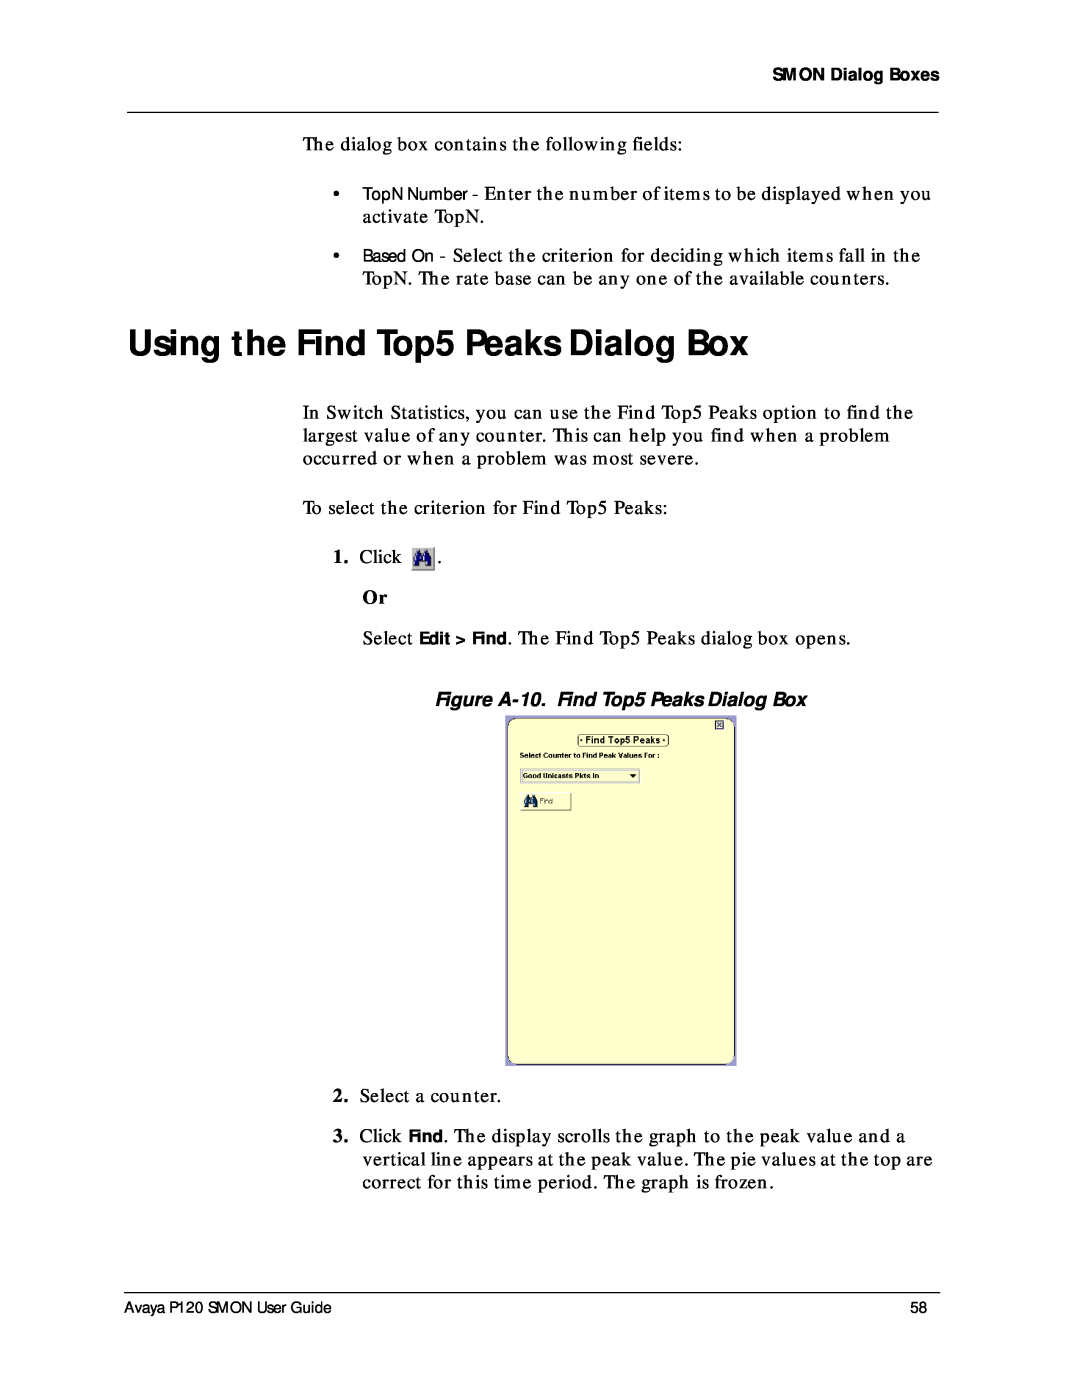 Avaya P120 SMON manual Using the Find Top5 Peaks Dialog Box, Figure A-10. Find Top5 Peaks Dialog Box 